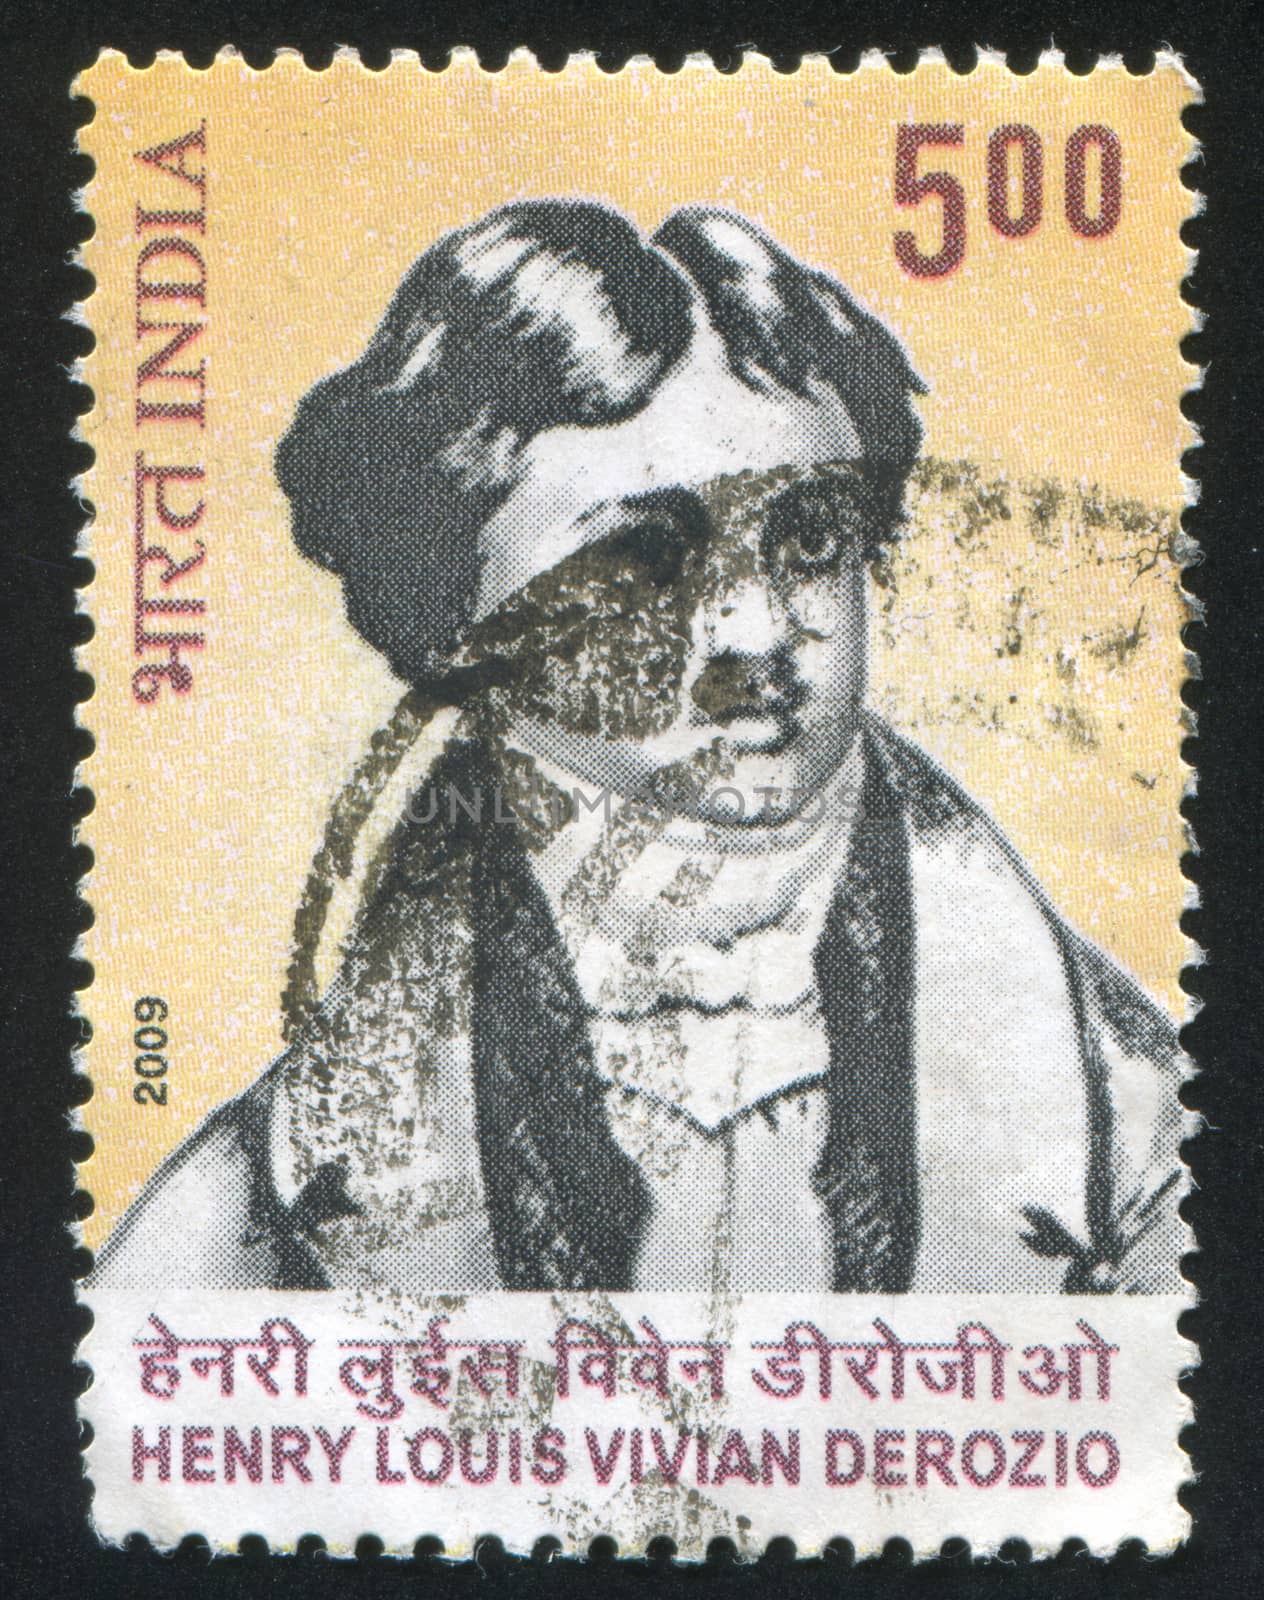 INDIA - CIRCA 2009: stamp printed by India, shows Henry Louis Vivian Derozio, circa 2009